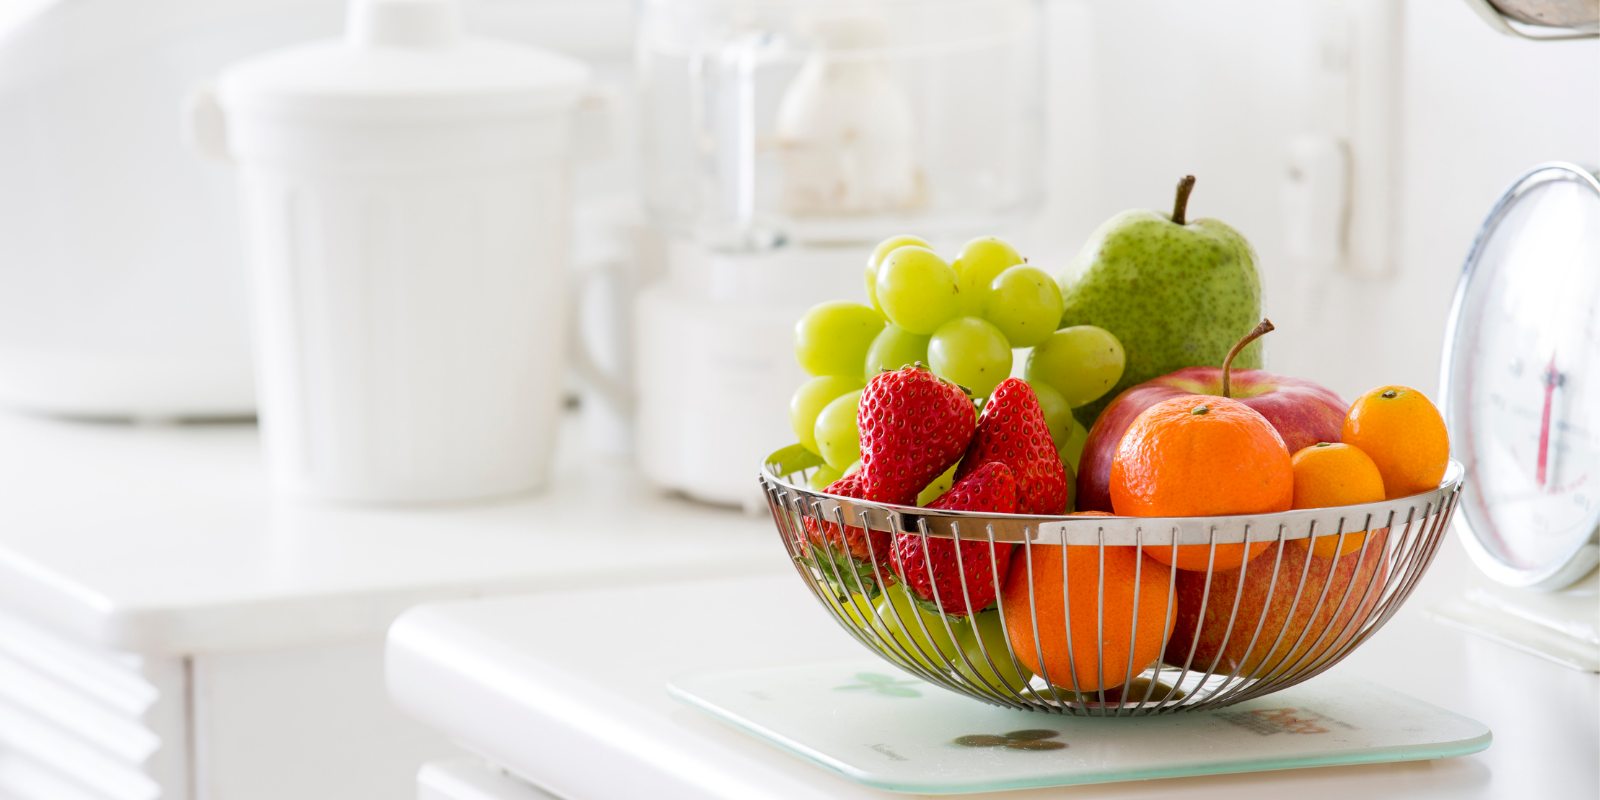 Reorganize Your Kitchen to Improve Your Health- 10 Ways to Create a Healthier Kitchen Environment